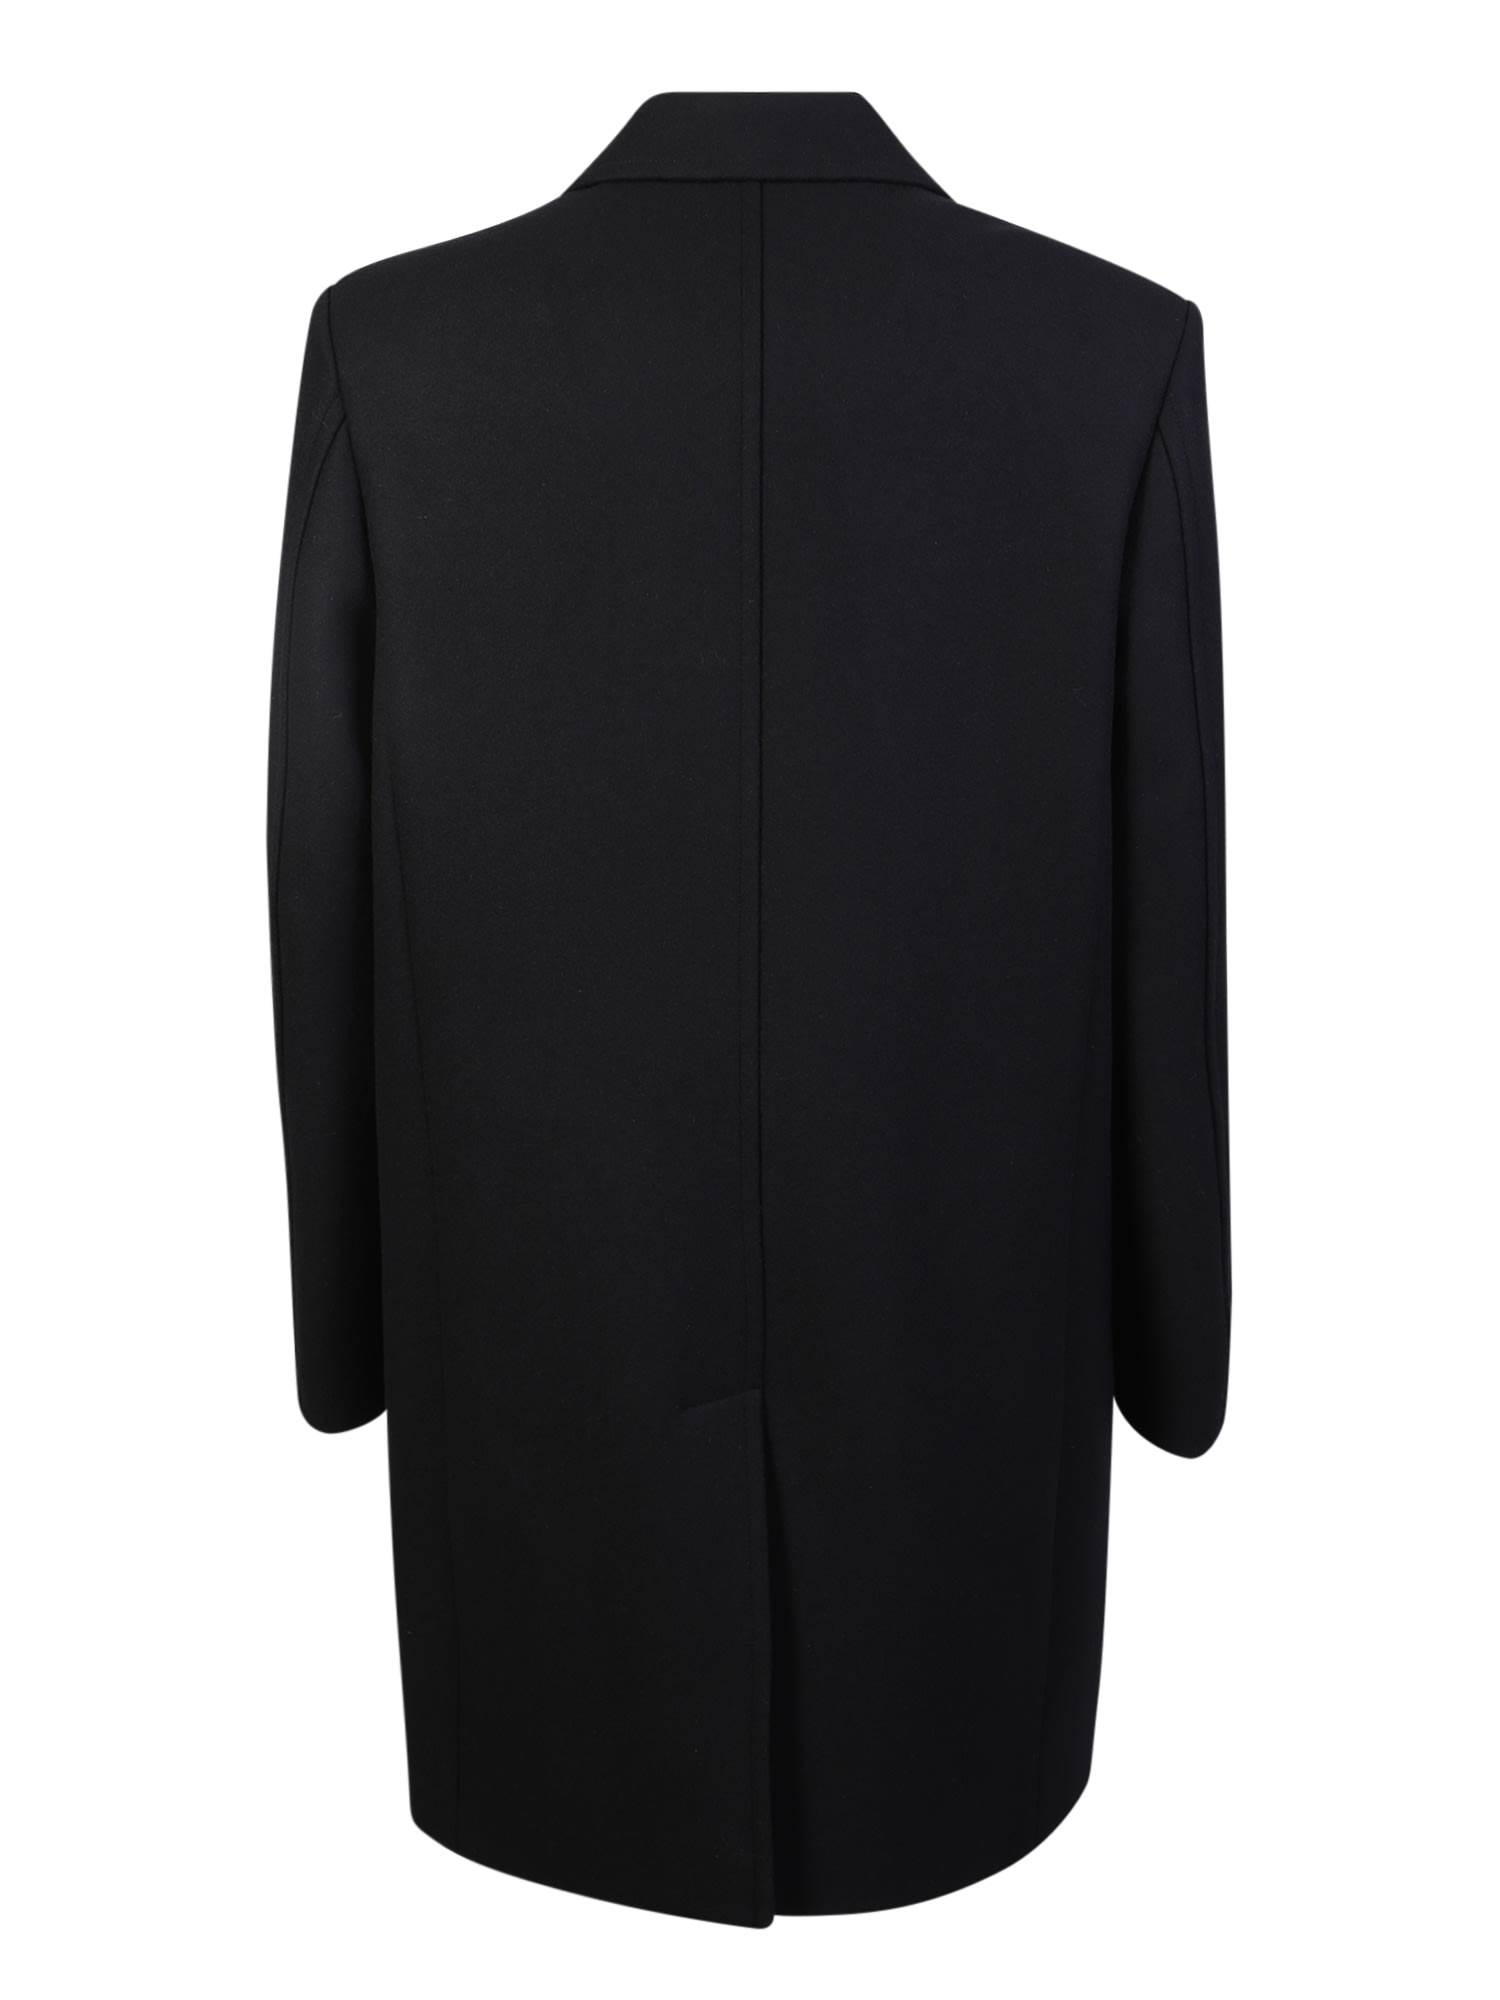 Shop Alyx Black Wool Coat